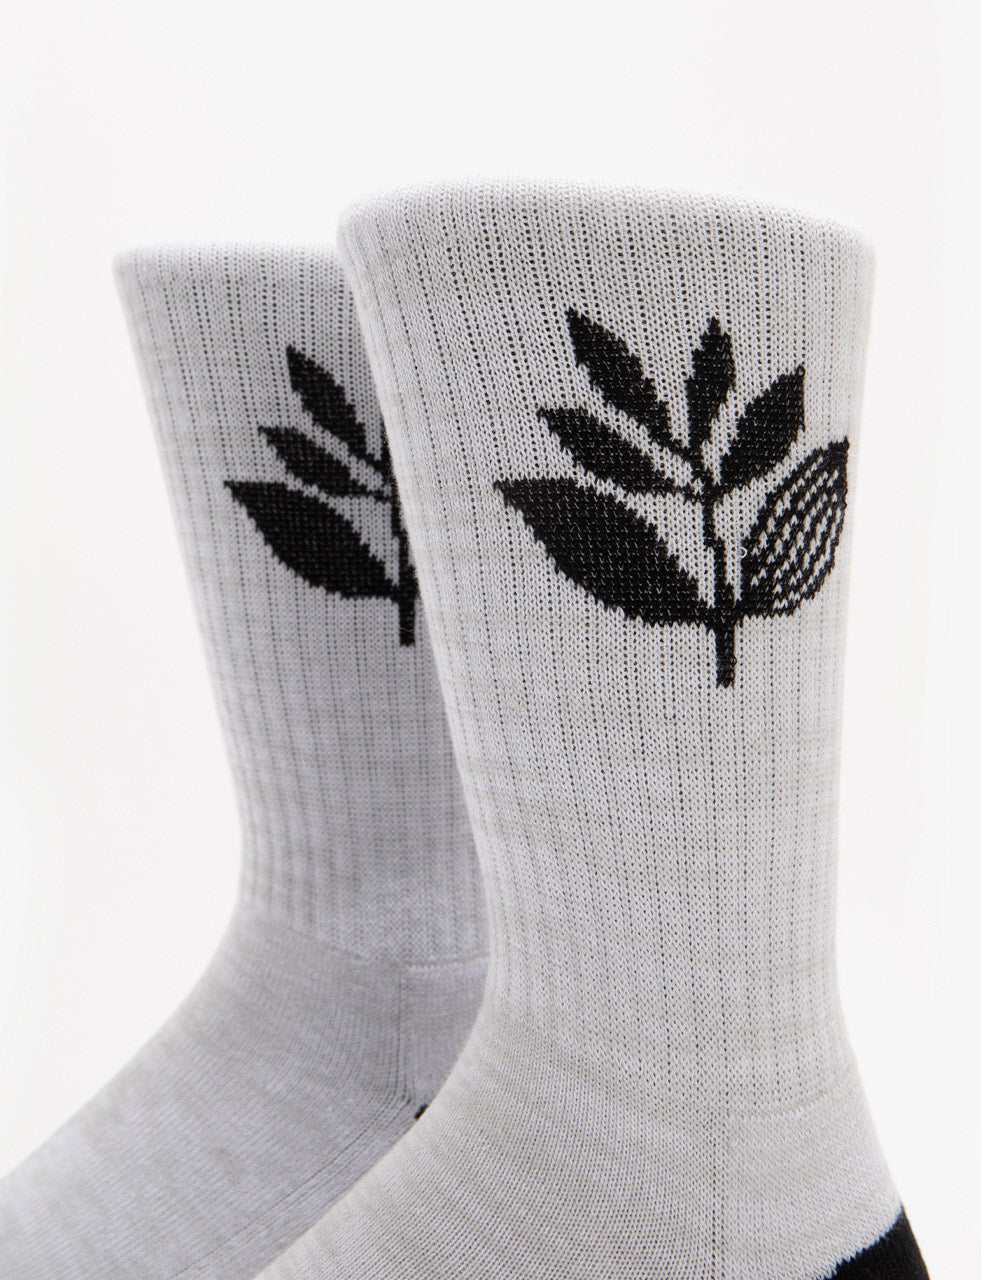 Magenta Plant Socks - Ash